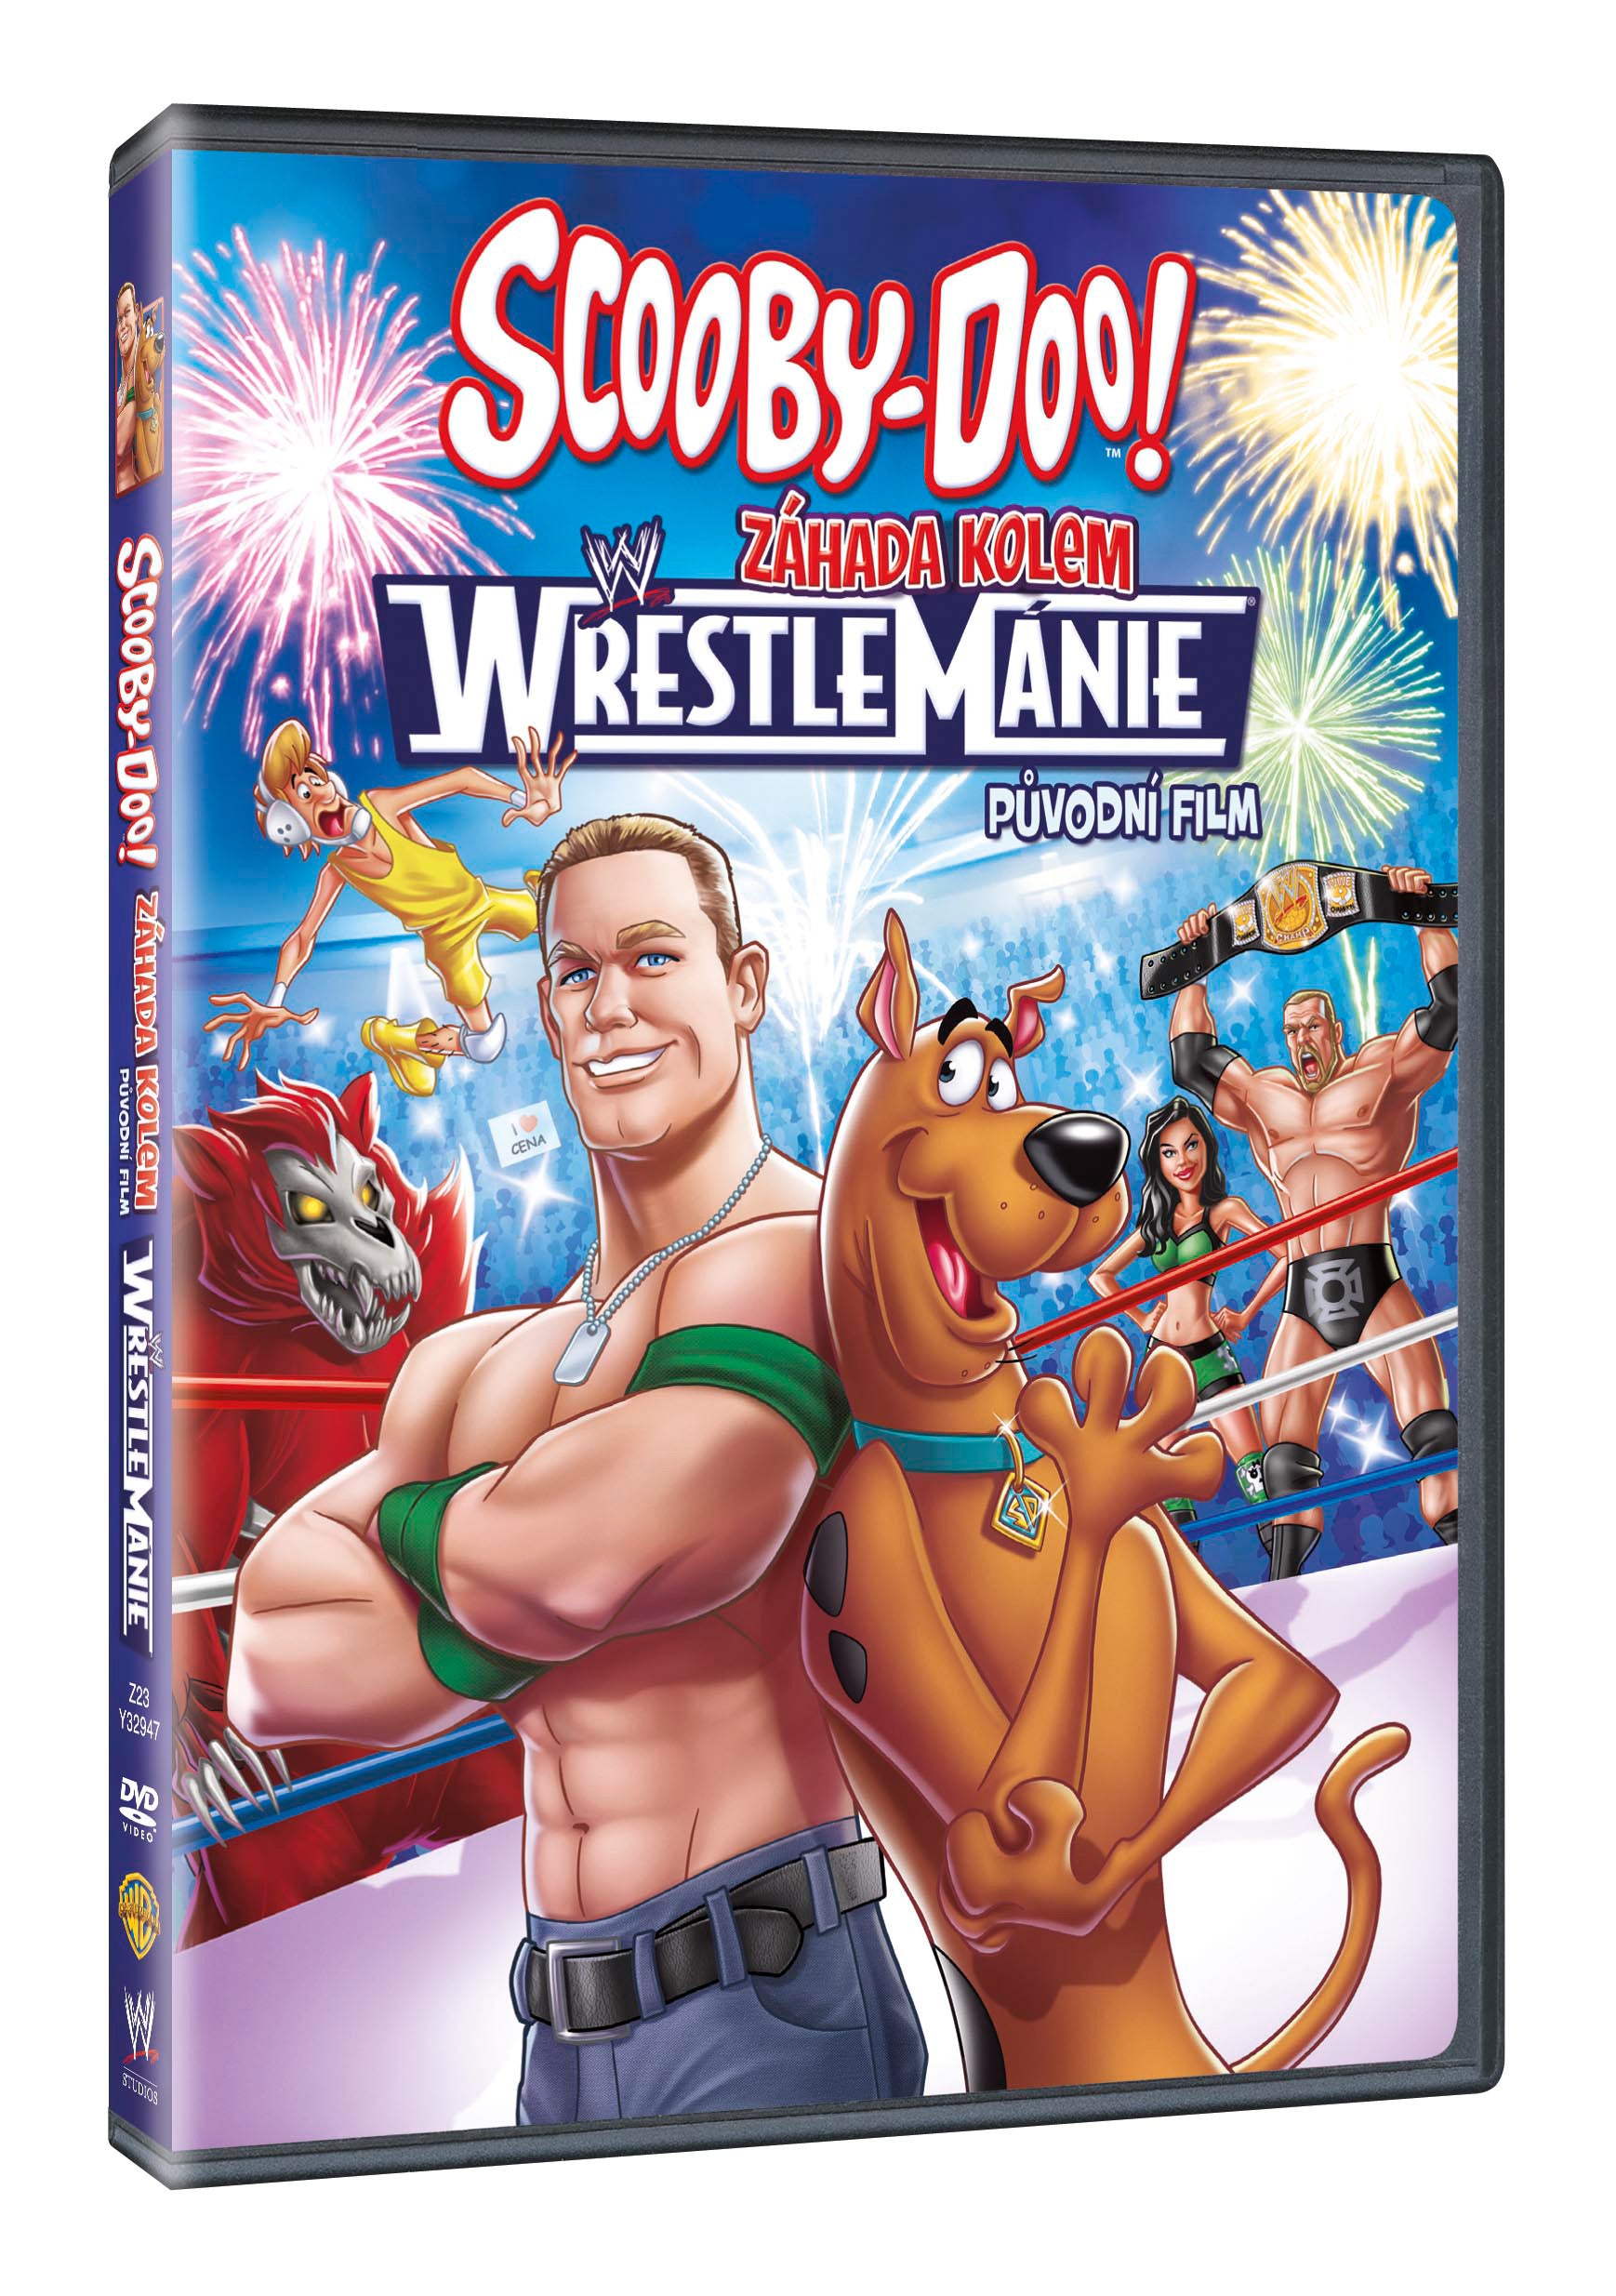 Scooby Doo: Zahada kolem Wrestlemanie DVD / Scooby Doo: Wrestemania Mystery